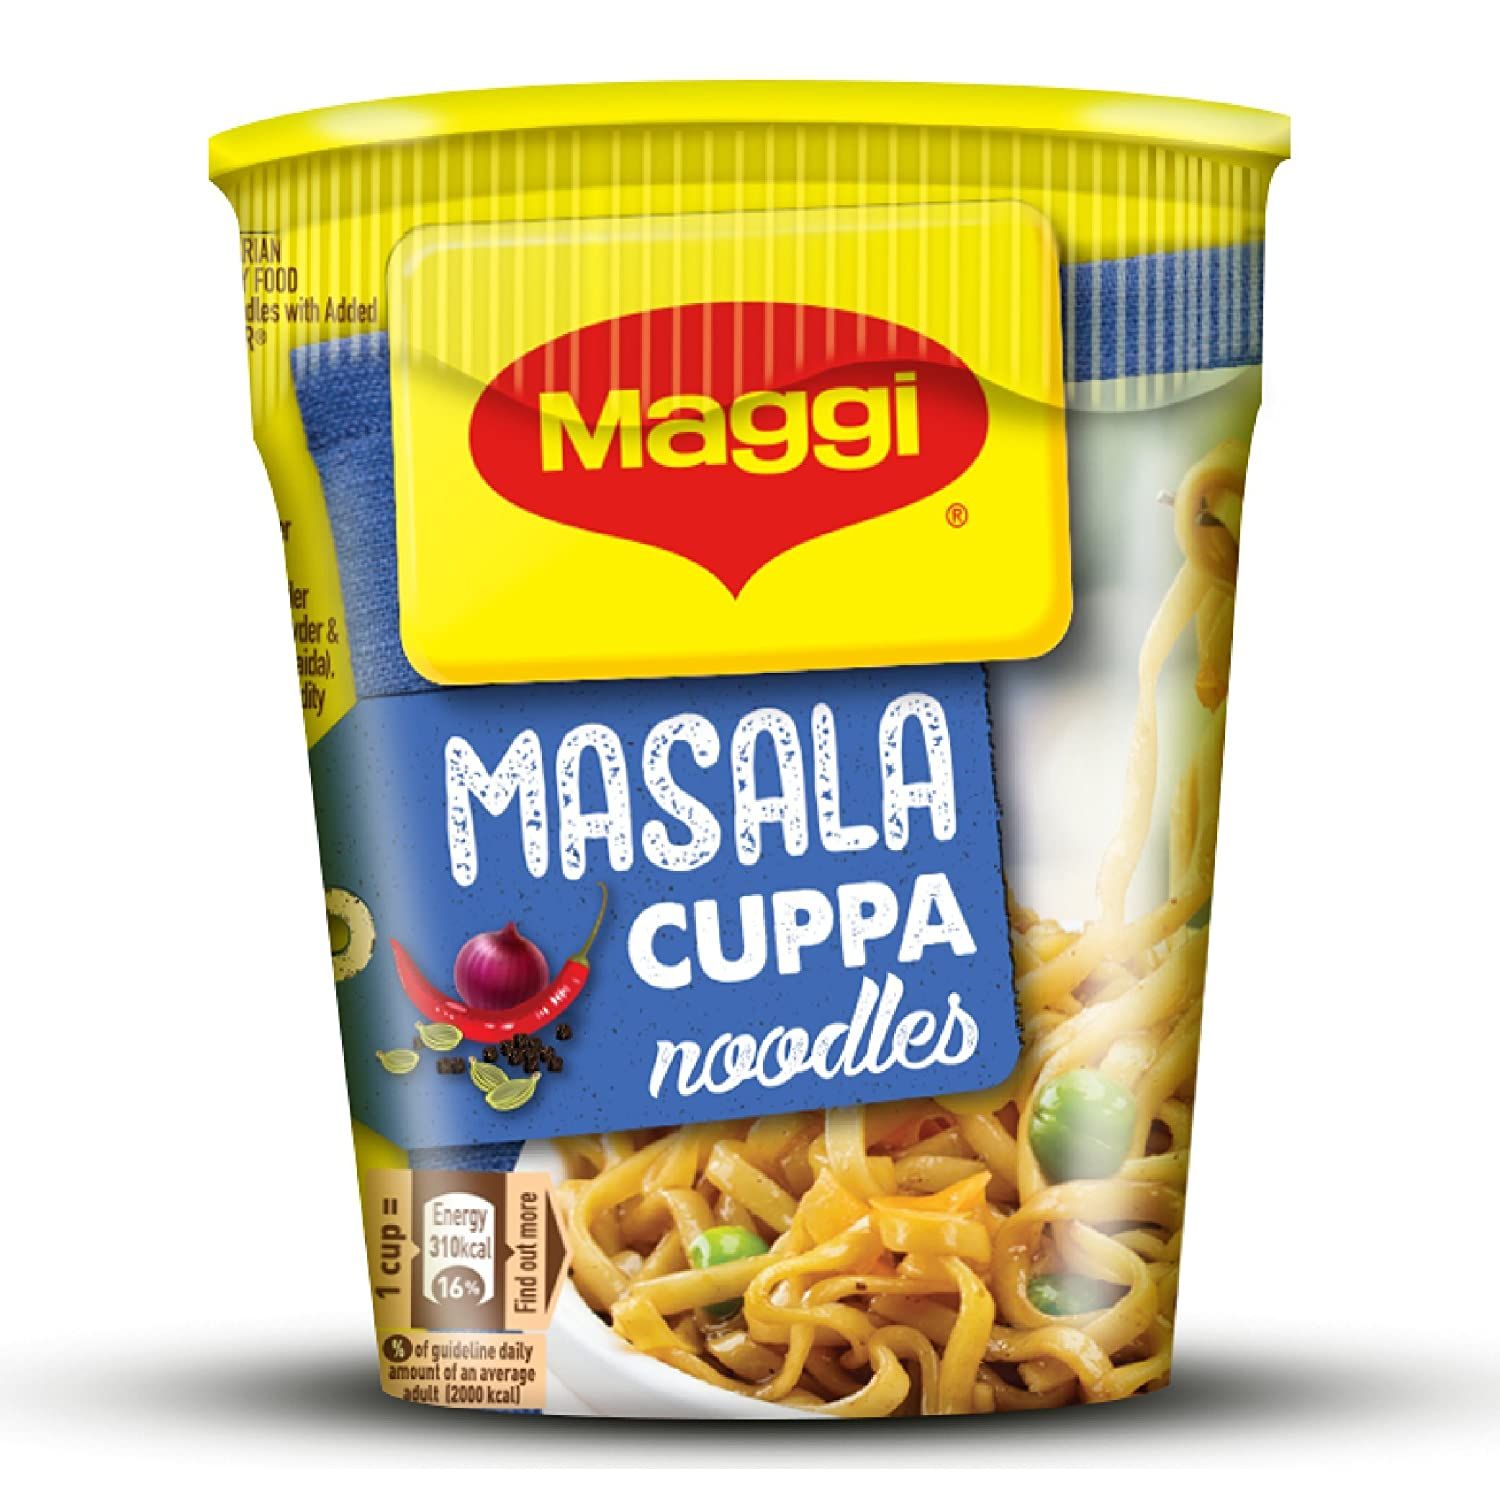 Maggi Cuppa Mania Noodles Yo Masala Image